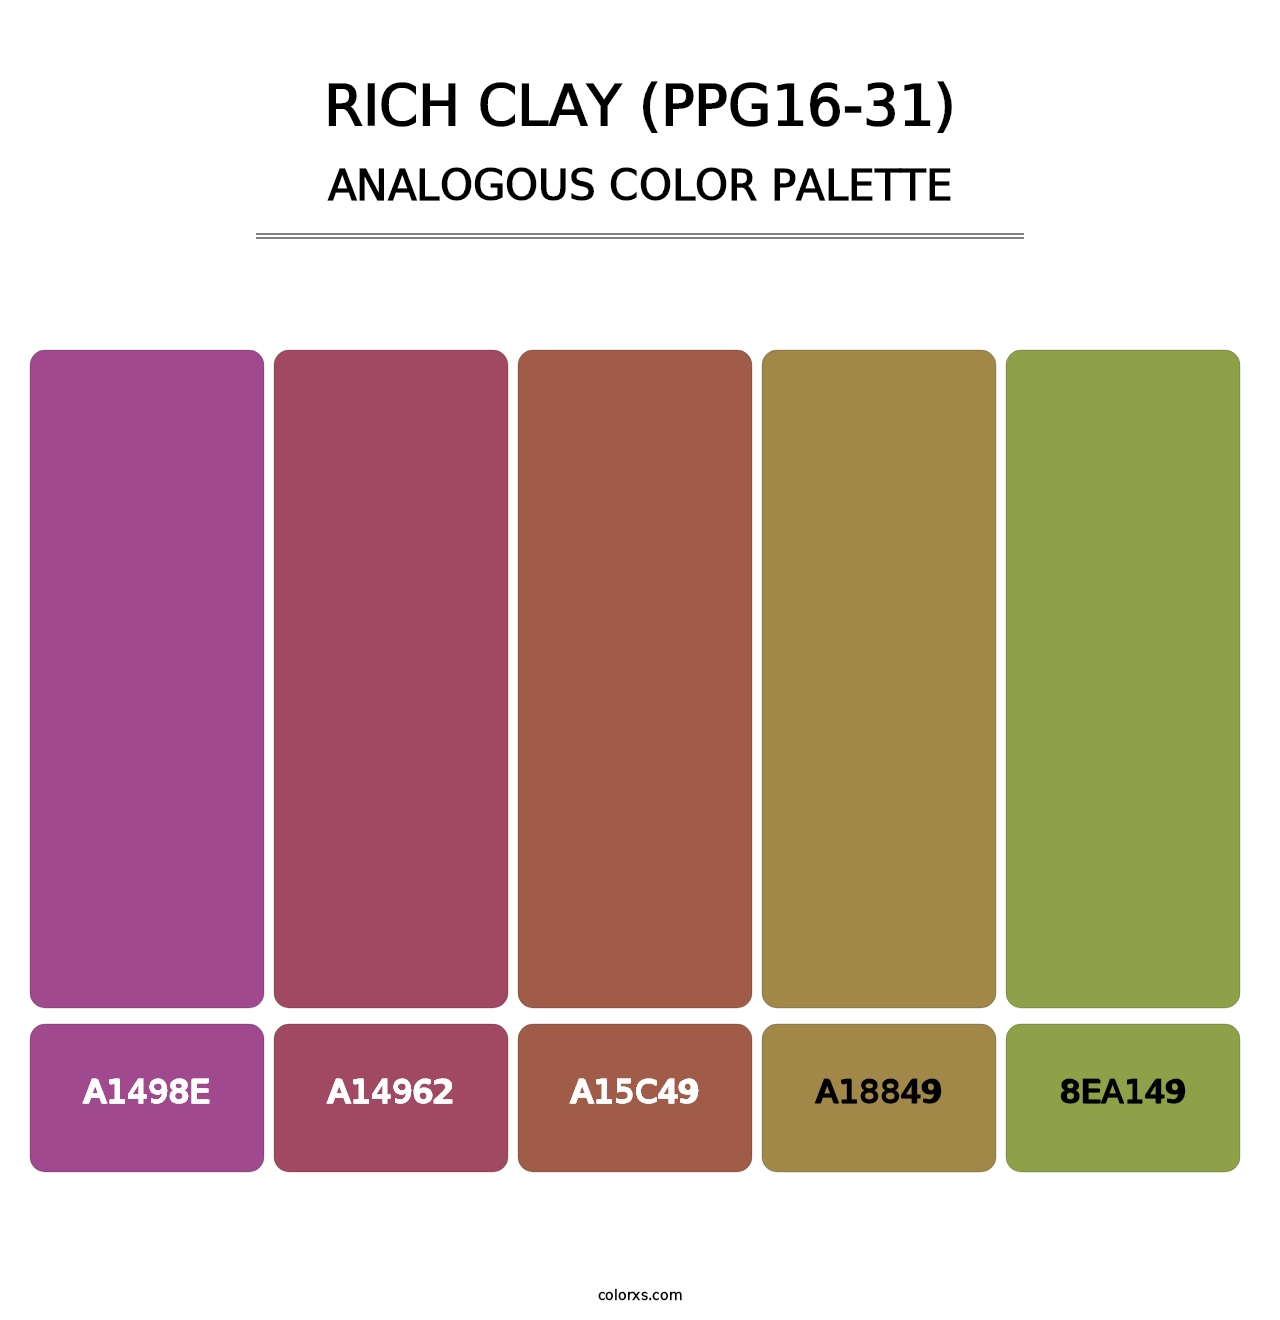 Rich Clay (PPG16-31) - Analogous Color Palette